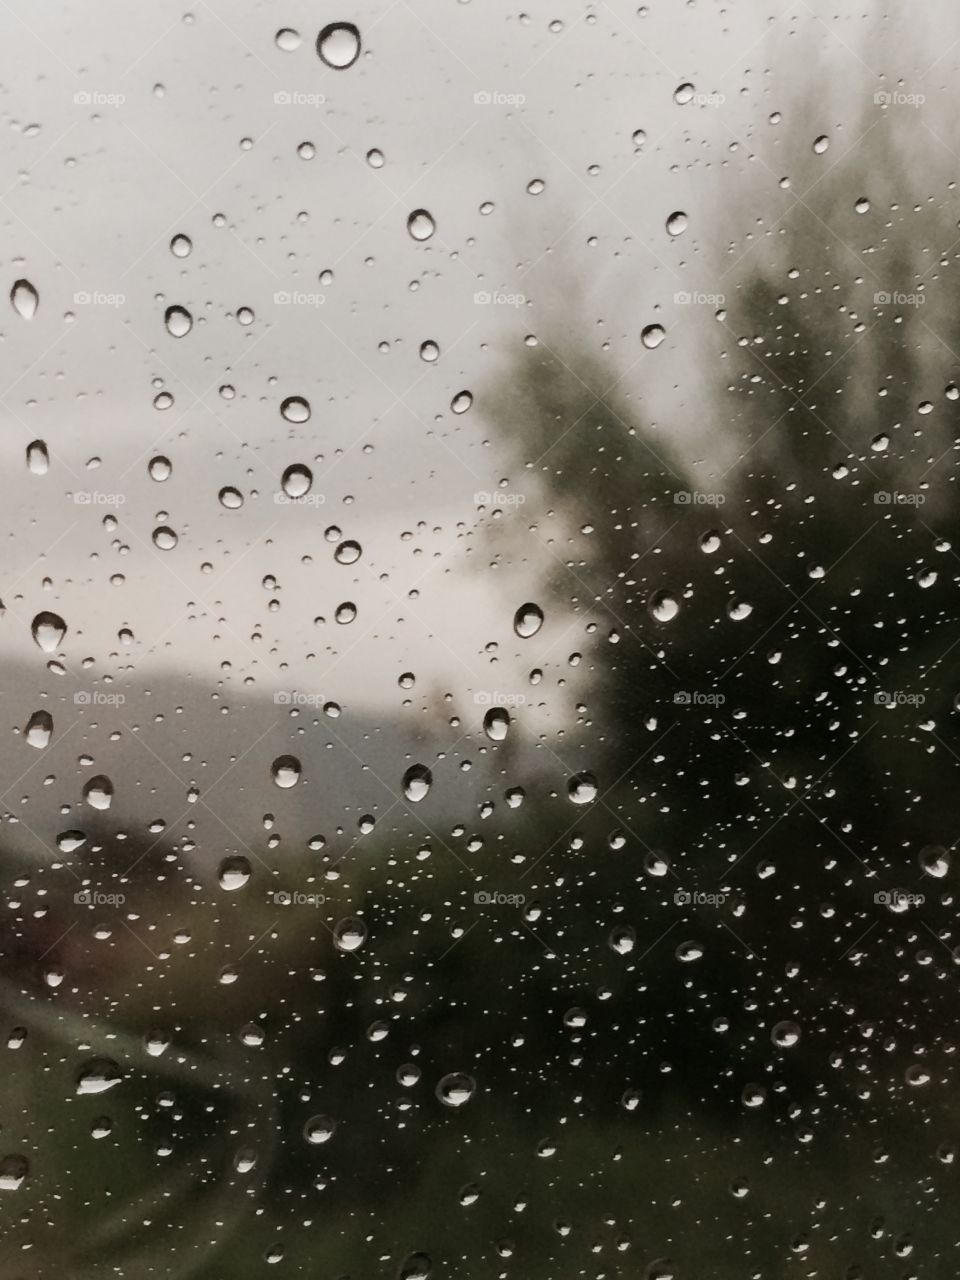 Raindrops on window with unfocused background